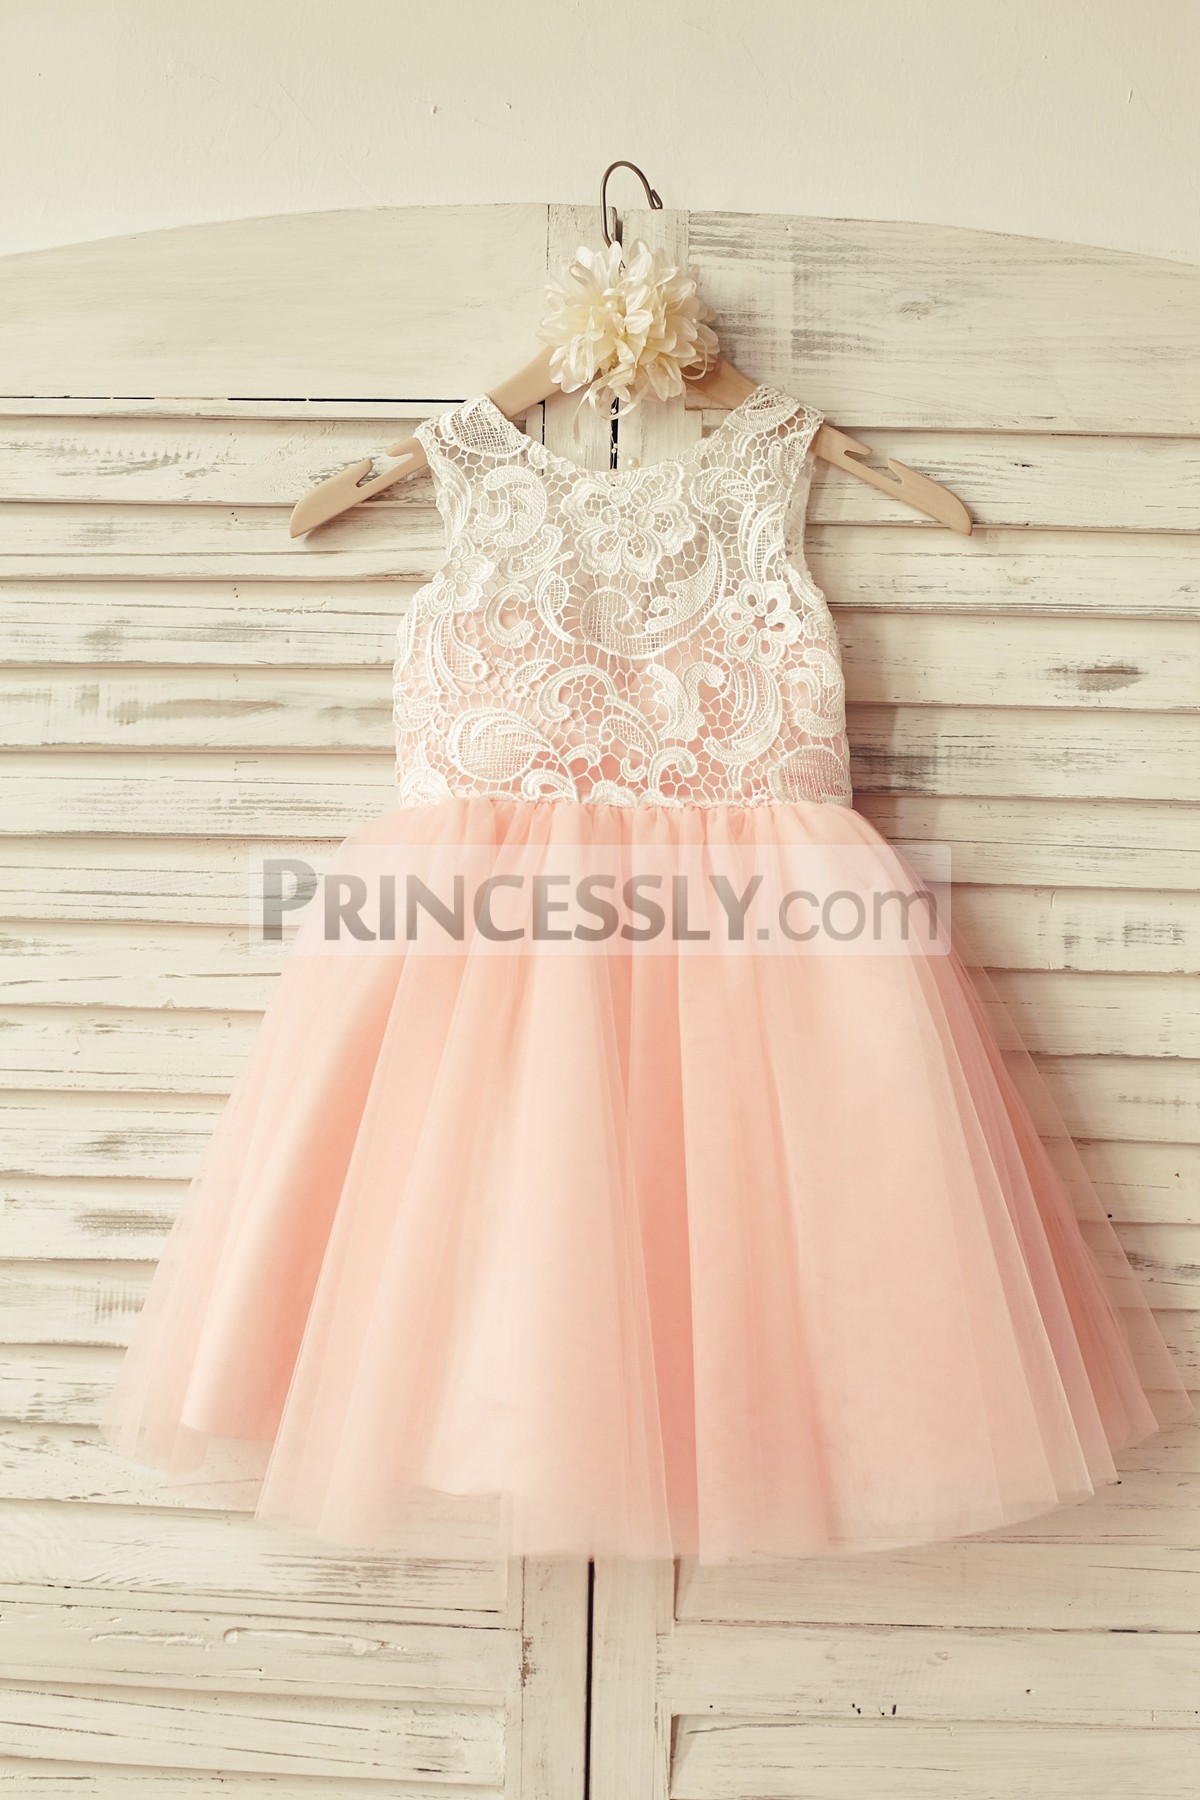 Princessly.com-K1000104-Princess Ivory Lace Blush Pink Tulle Flower Girl Dress-31